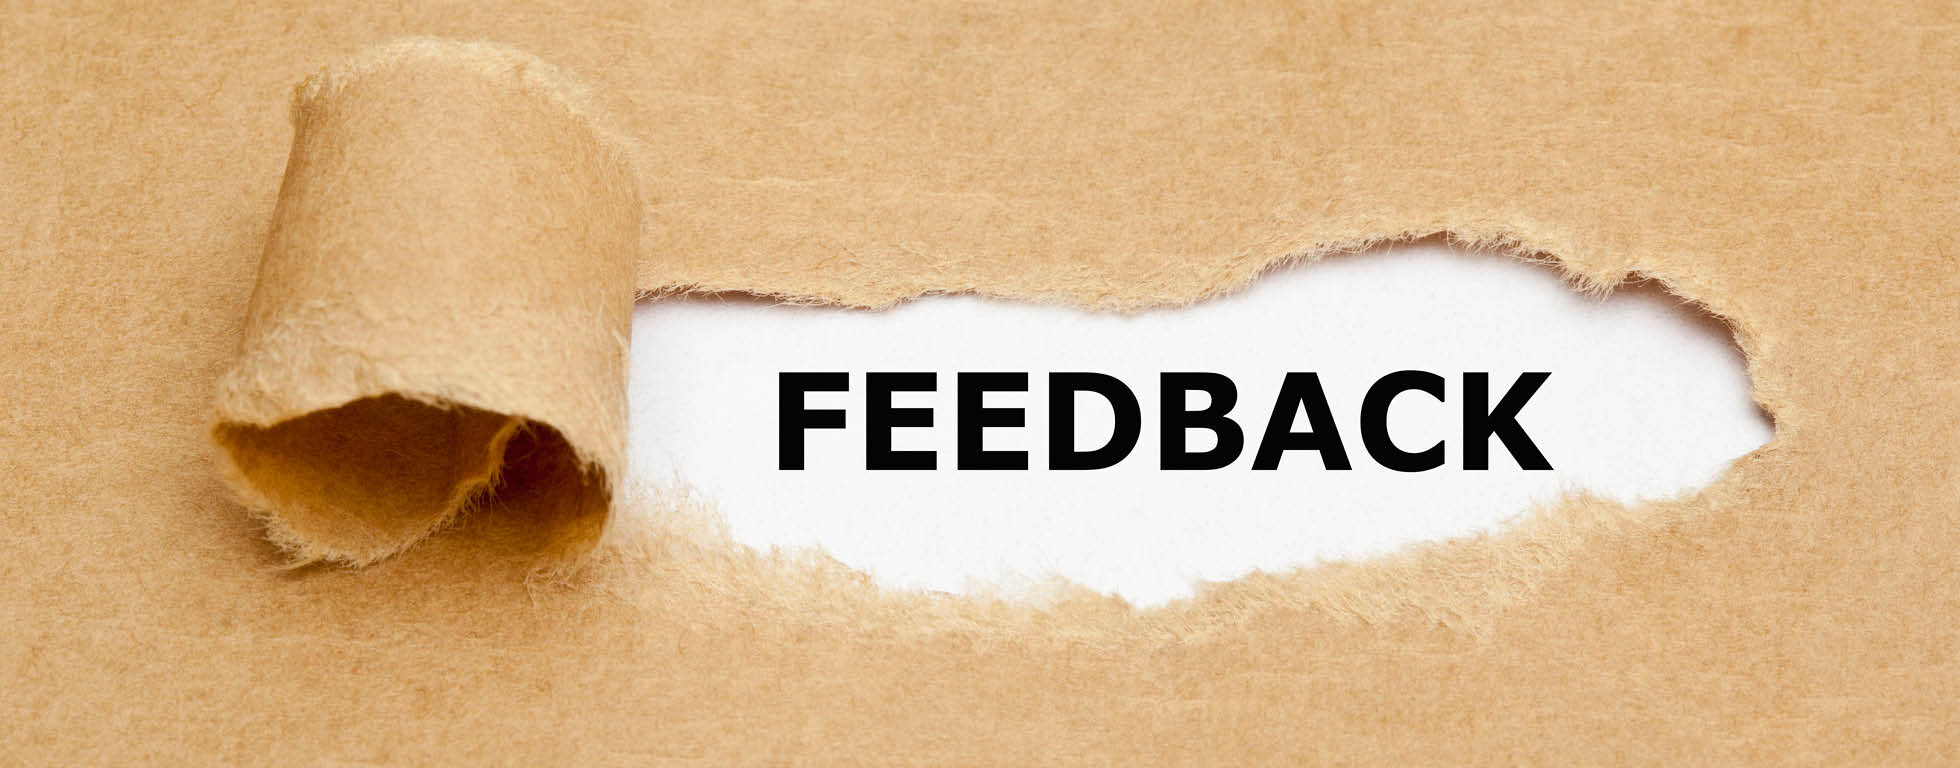 feedback-customer-service